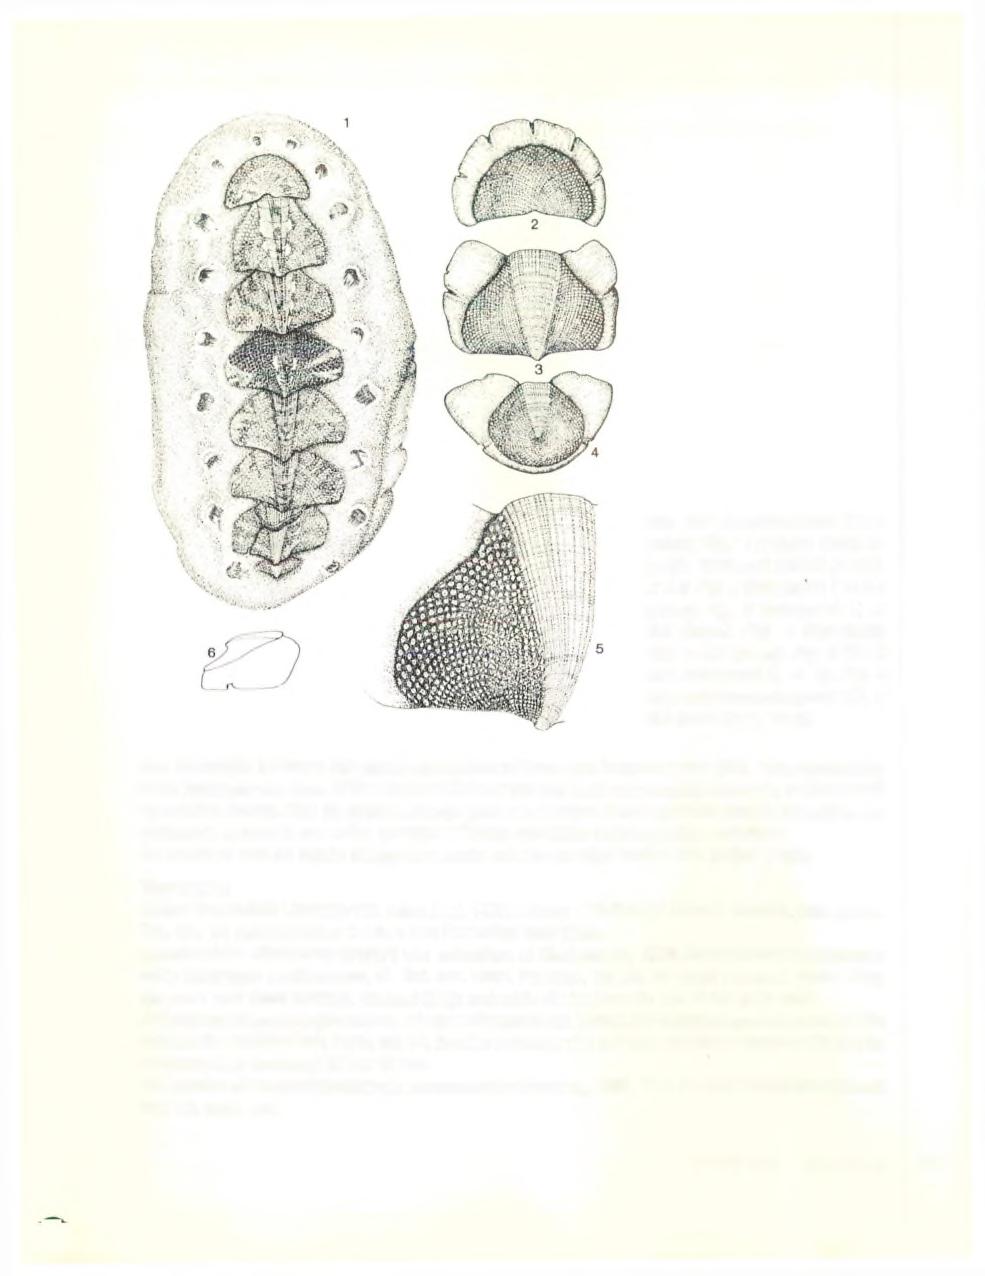 Afb. 107 Acanthochitona fascicularis. Fig. 1 Neotype, Oran, Aigarije. 1842, coll. MNHN (Parijs), x 4.5. Fig. 2 Schelpstuk I, x 5.5 (Idem). Fig. 3 Schelpstuk II, x 5.5 (Idem). Fig. 4 Schelpstuk VIII, x 5.